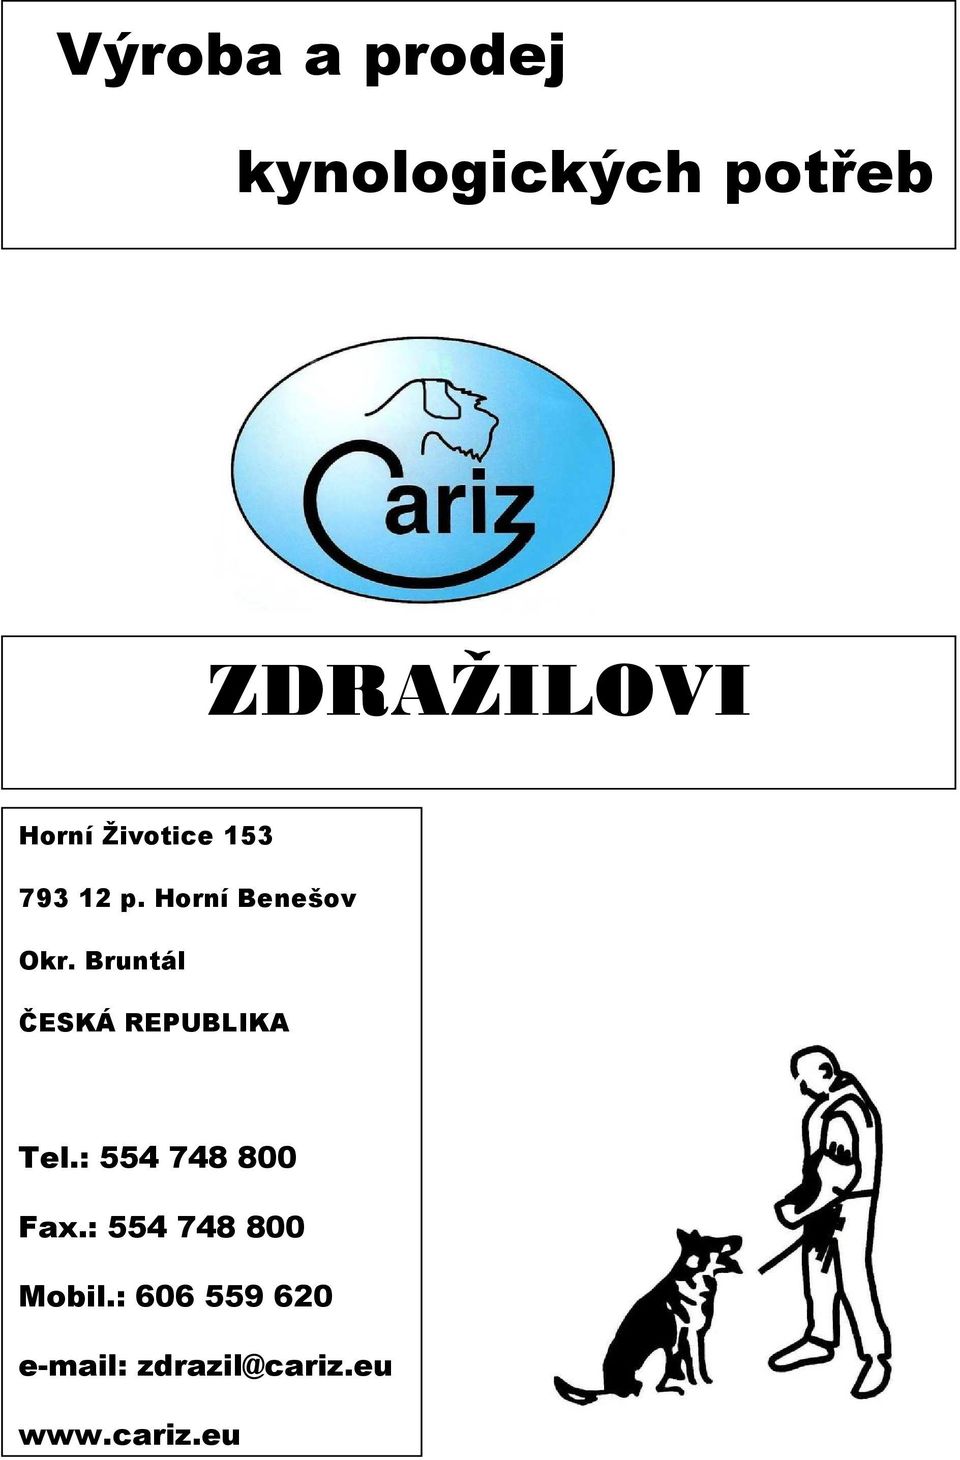 Bruntál ČESKÁ REPUBLIKA Tel.: 554 748 800 Fax.